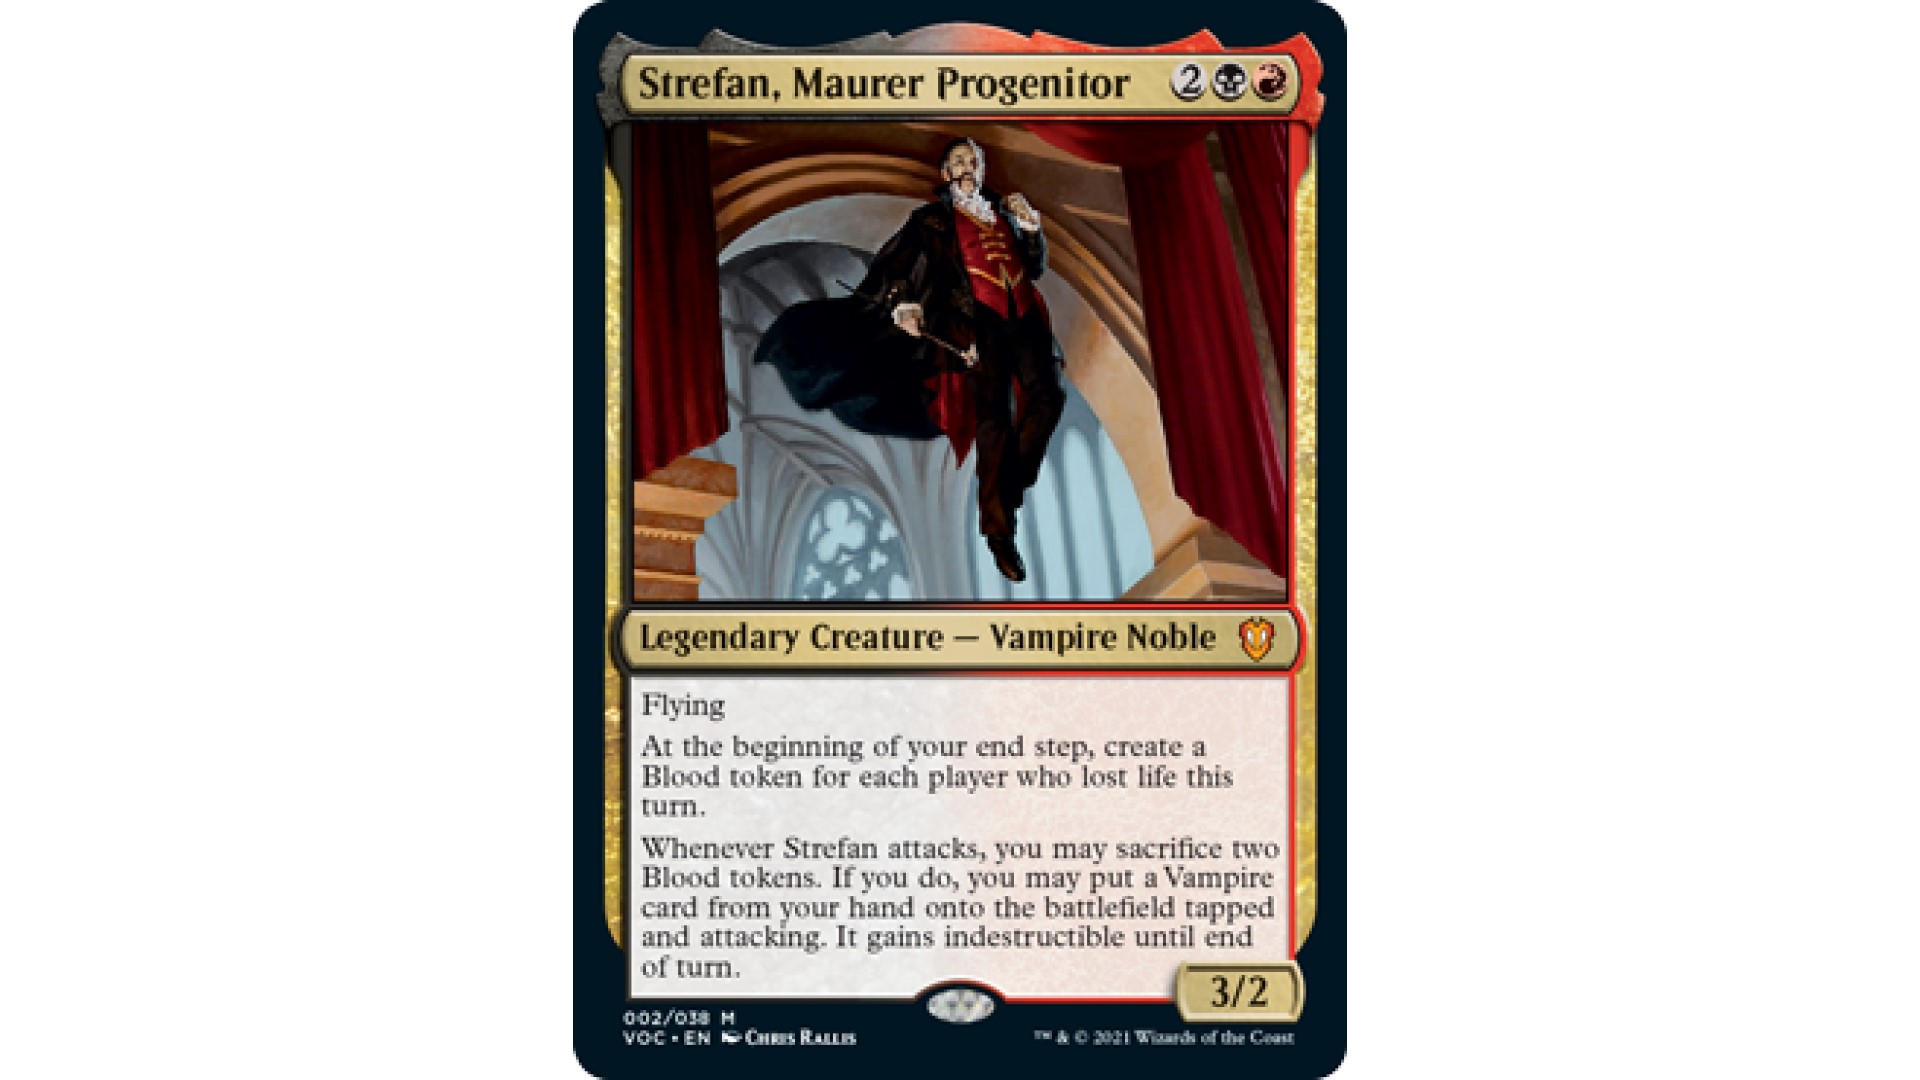 Magic: The Gathering - Innistrad Crimson Vow - Commander Decks (Set of 2)  (On Sale)